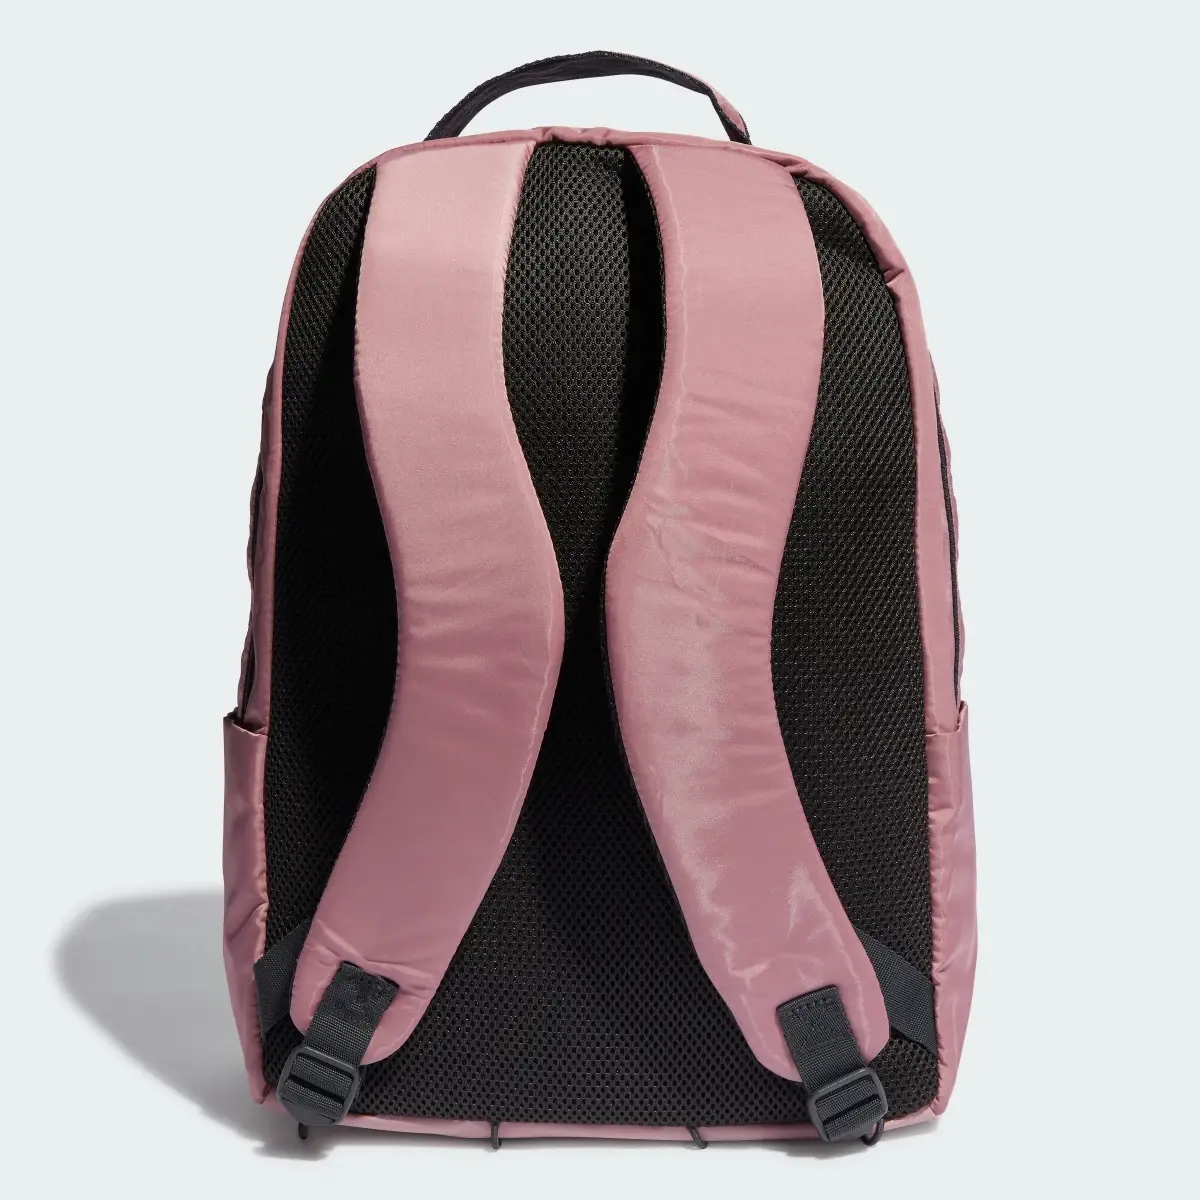 Adidas Yoga Backpack. 2